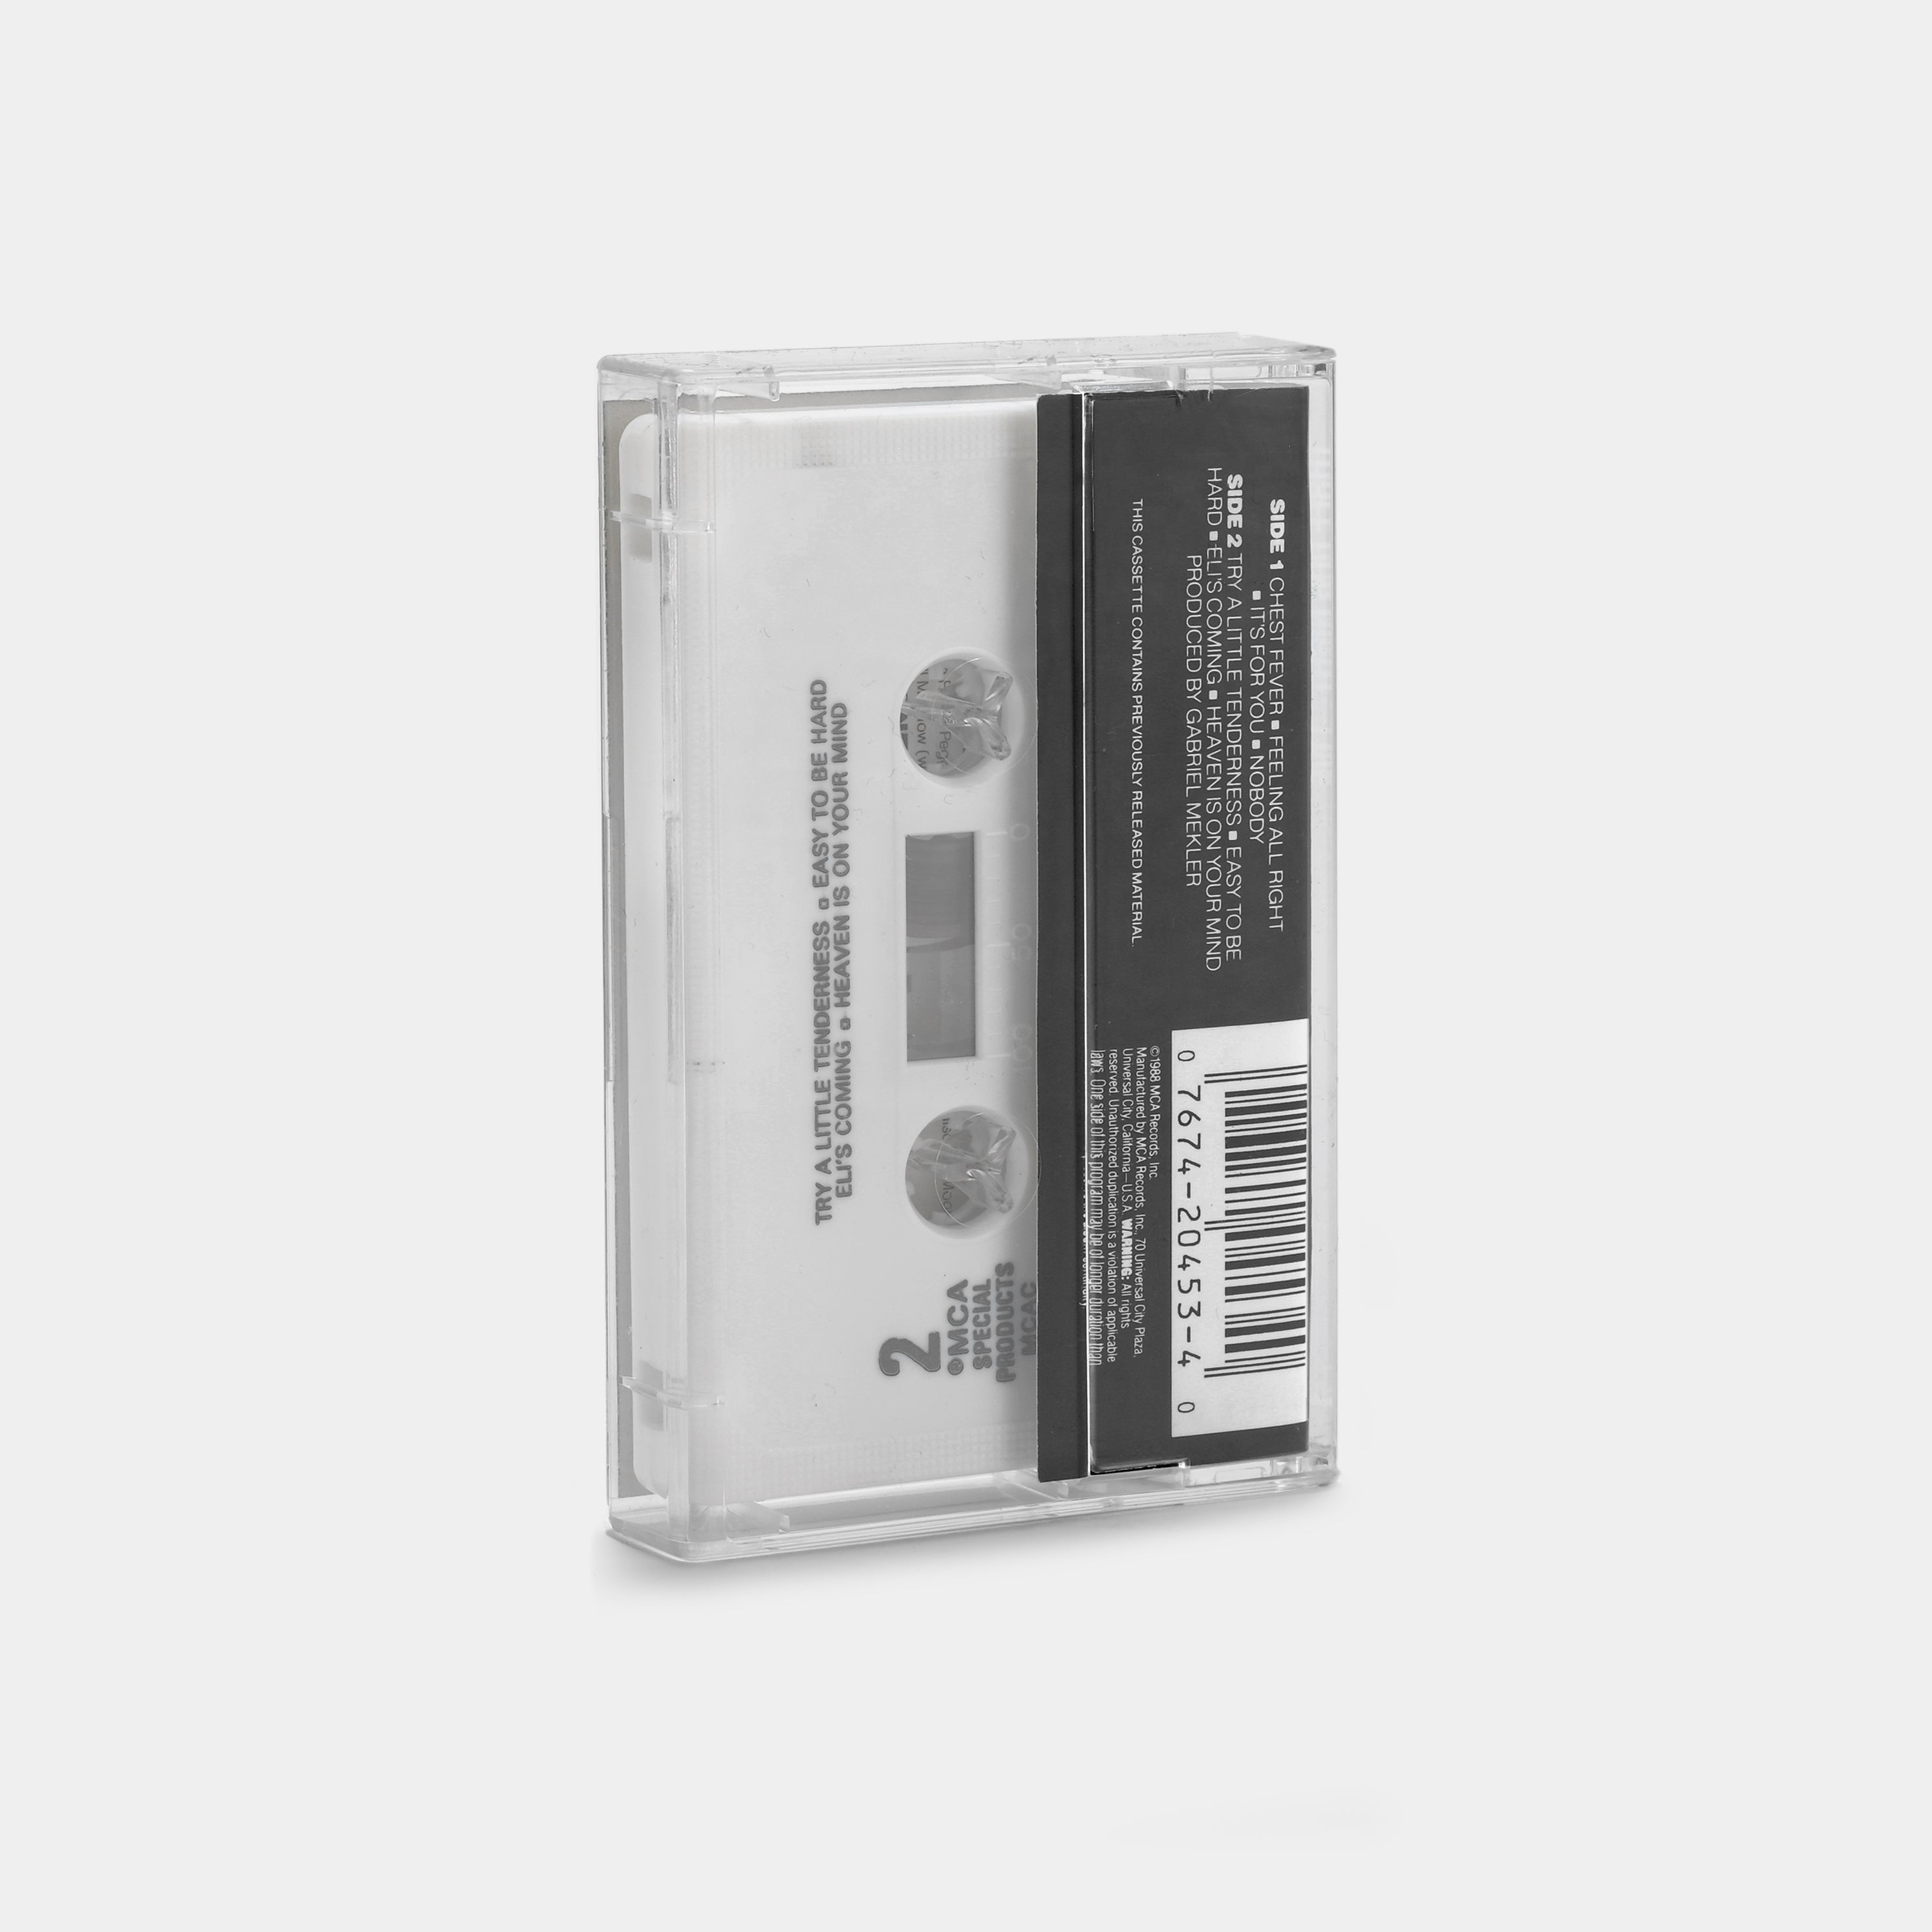 Three Dog Night - Live Cassette Tape